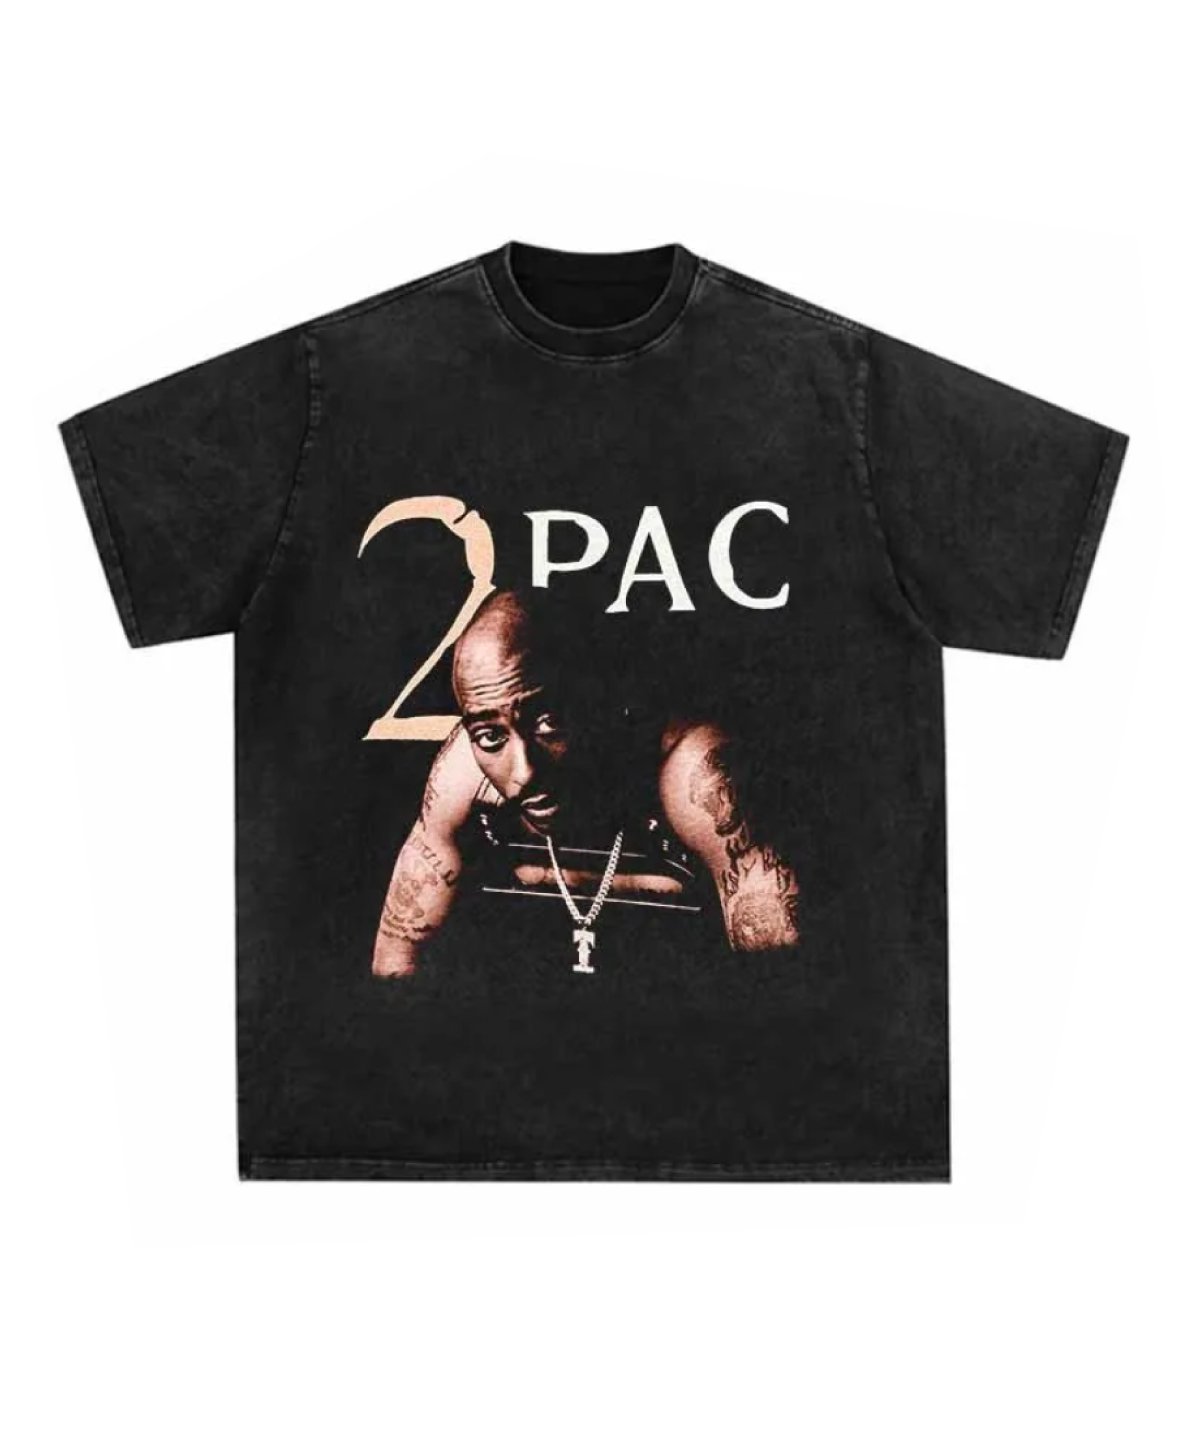 USA Select】 2PAC OVERSIZE Vintage T-Shirts.4